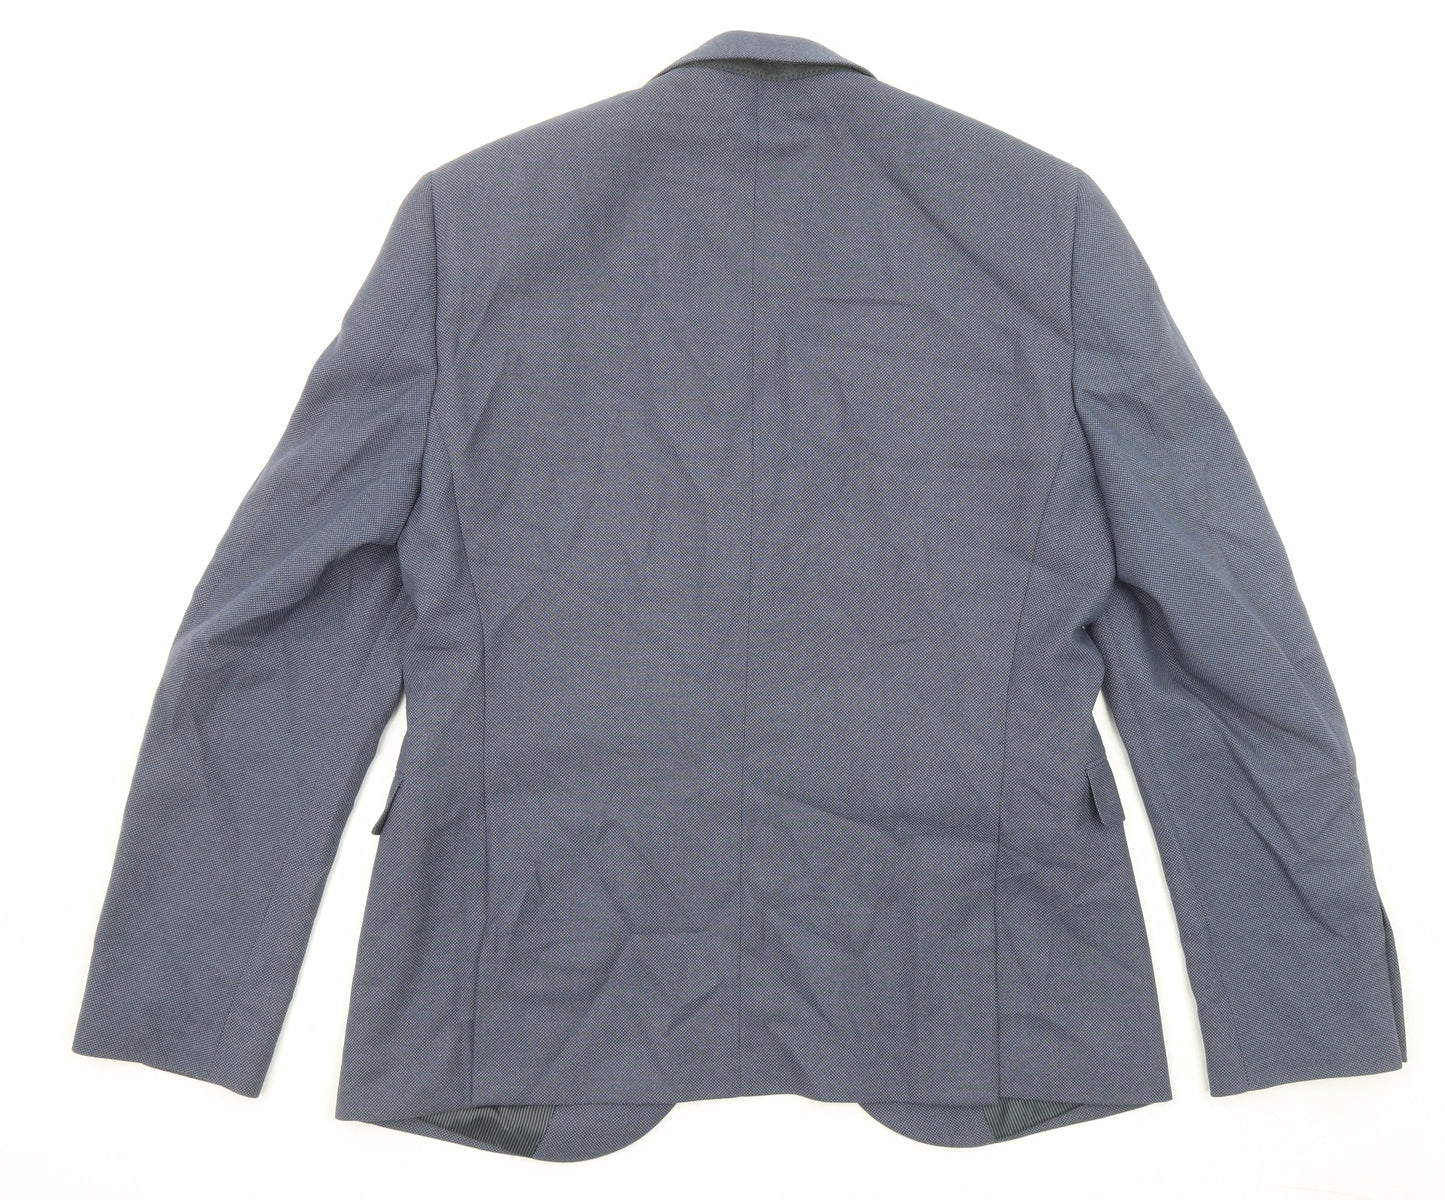 NEXT Mens Blue Polyester Jacket Suit Jacket Size 42 Regular